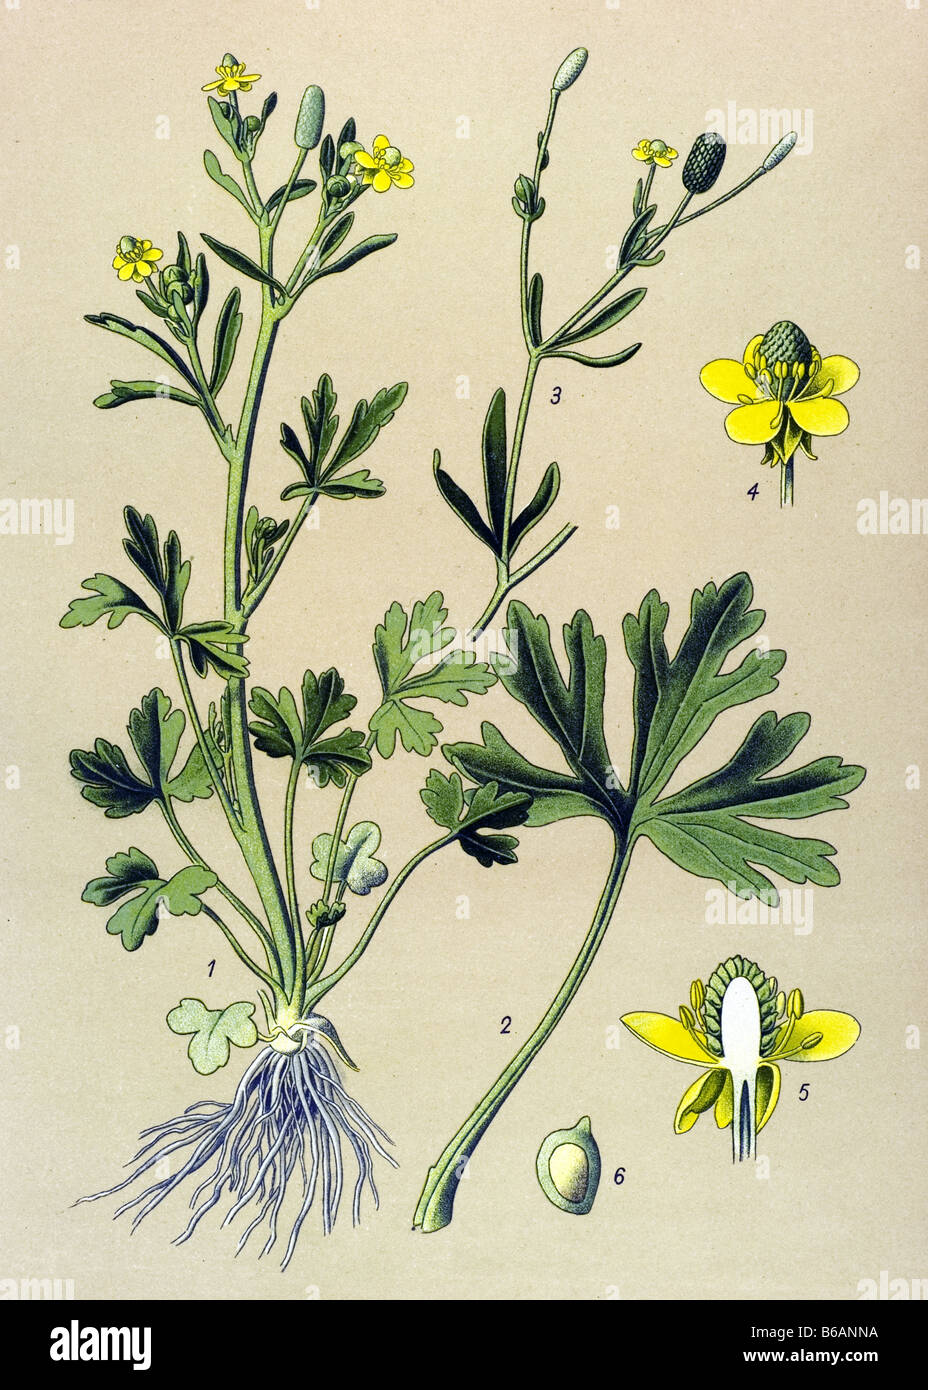 Celery-leaved Buttercup, Ranunculus sceleratus, poisonous plants illustrations Stock Photo